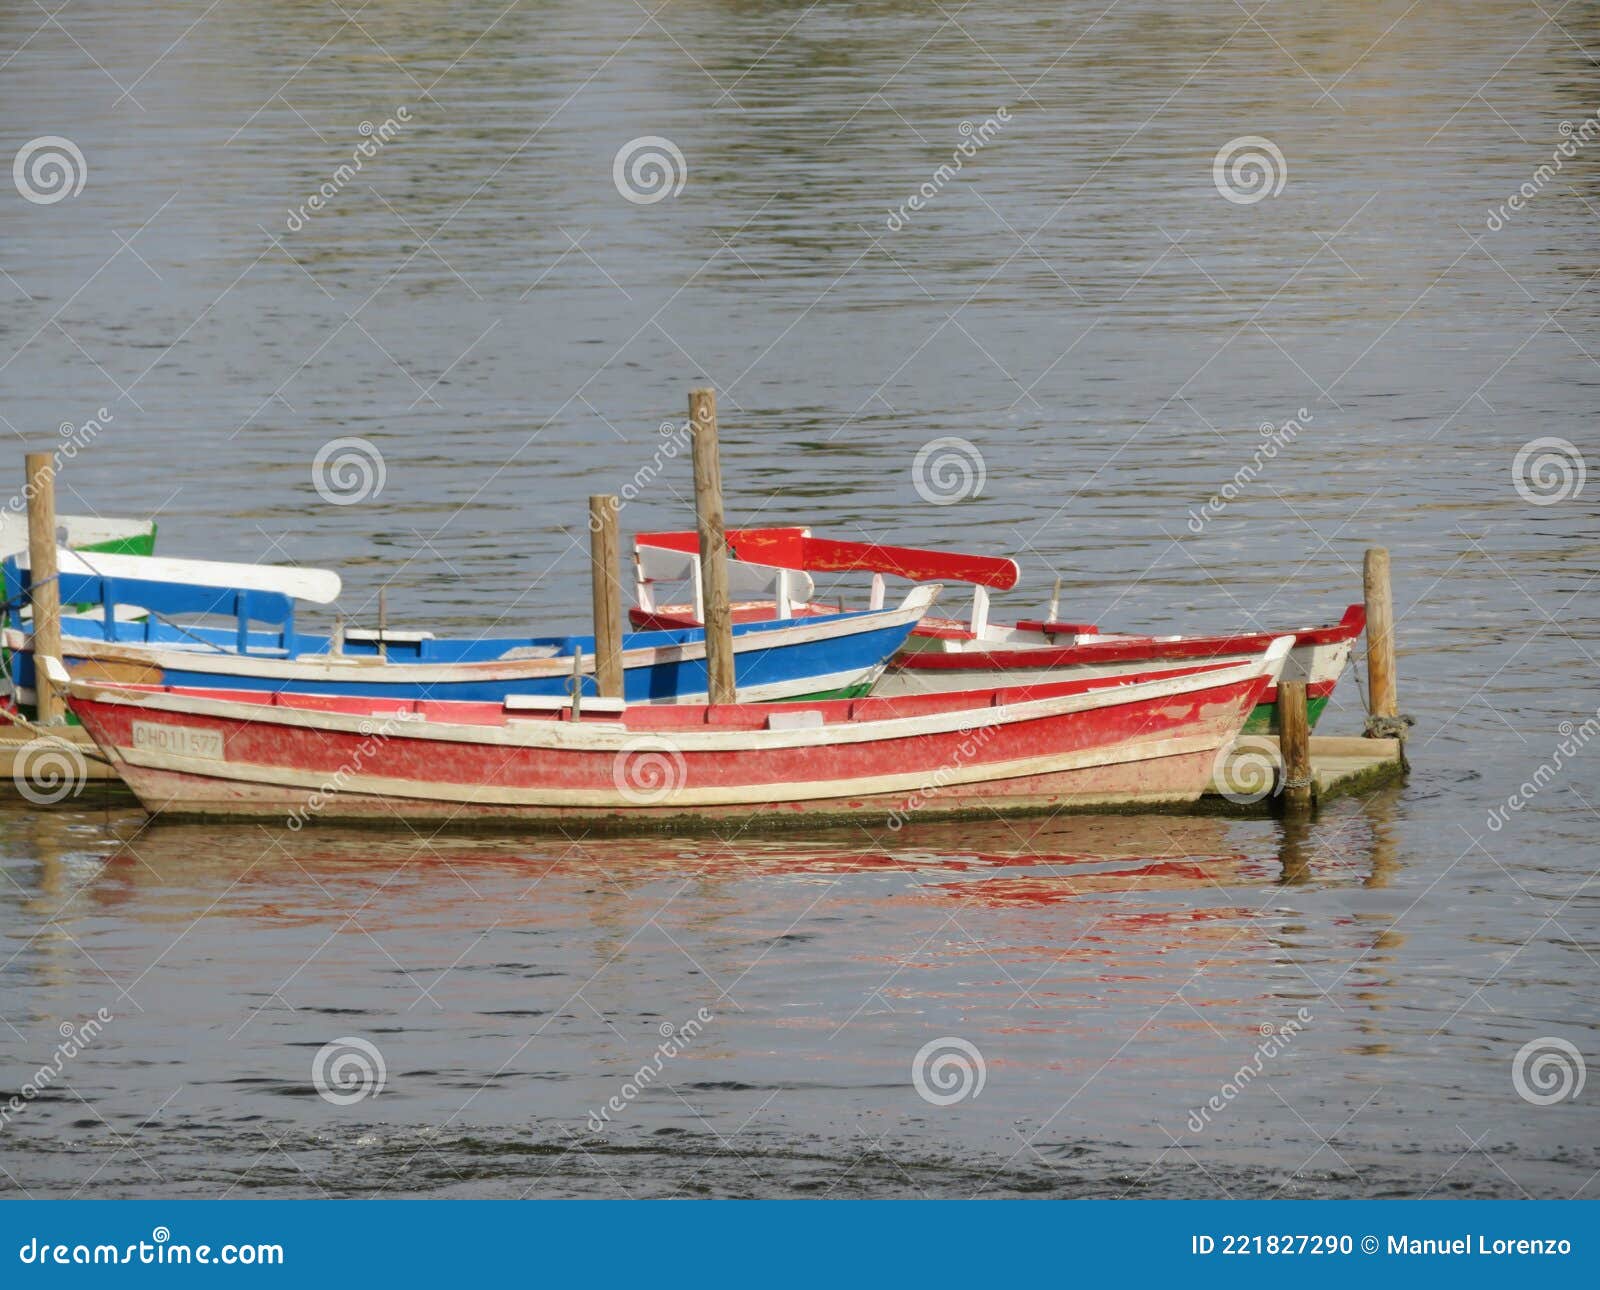 beautiful boats colorful river water wood floating fun fishing